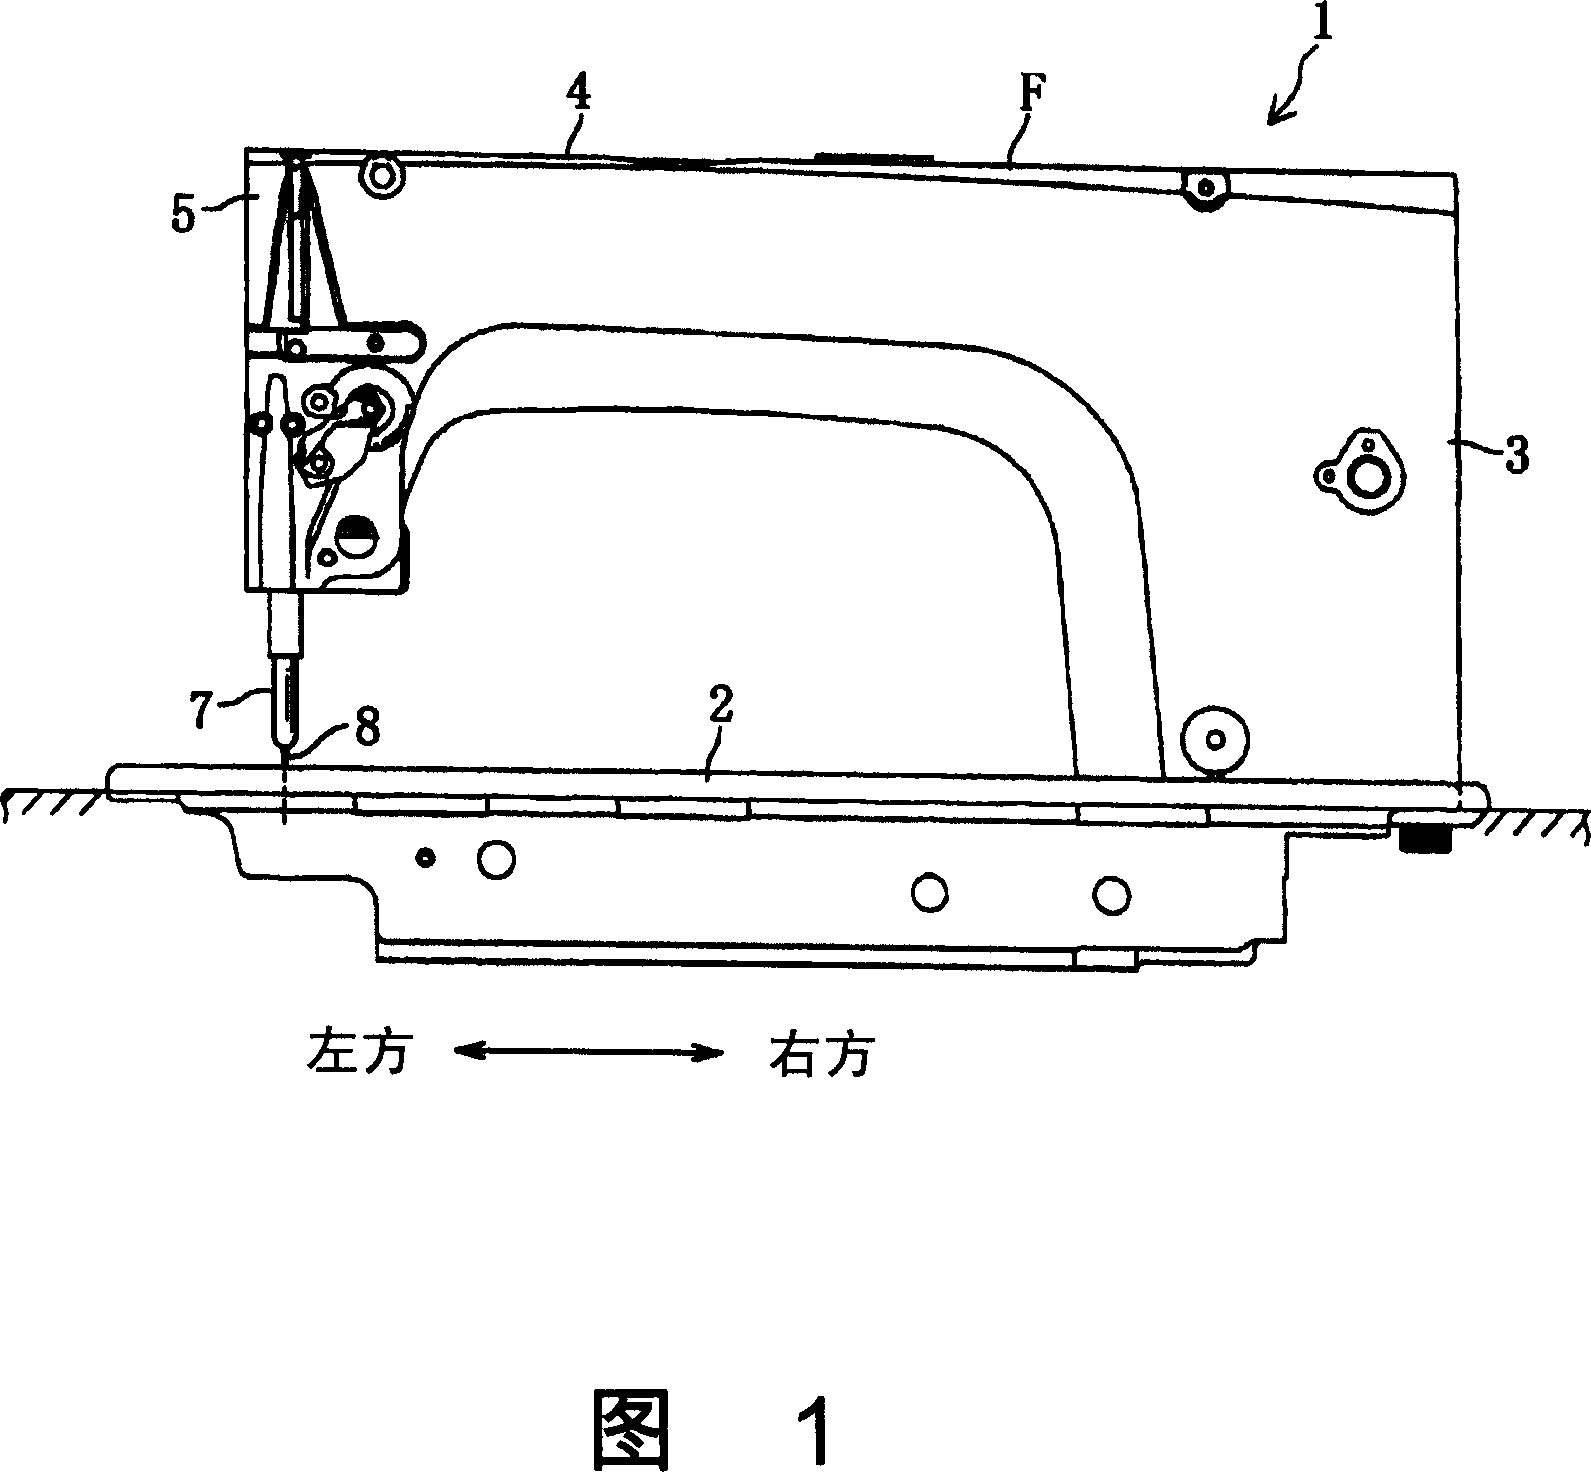 Bearing arrangement of sewing machine